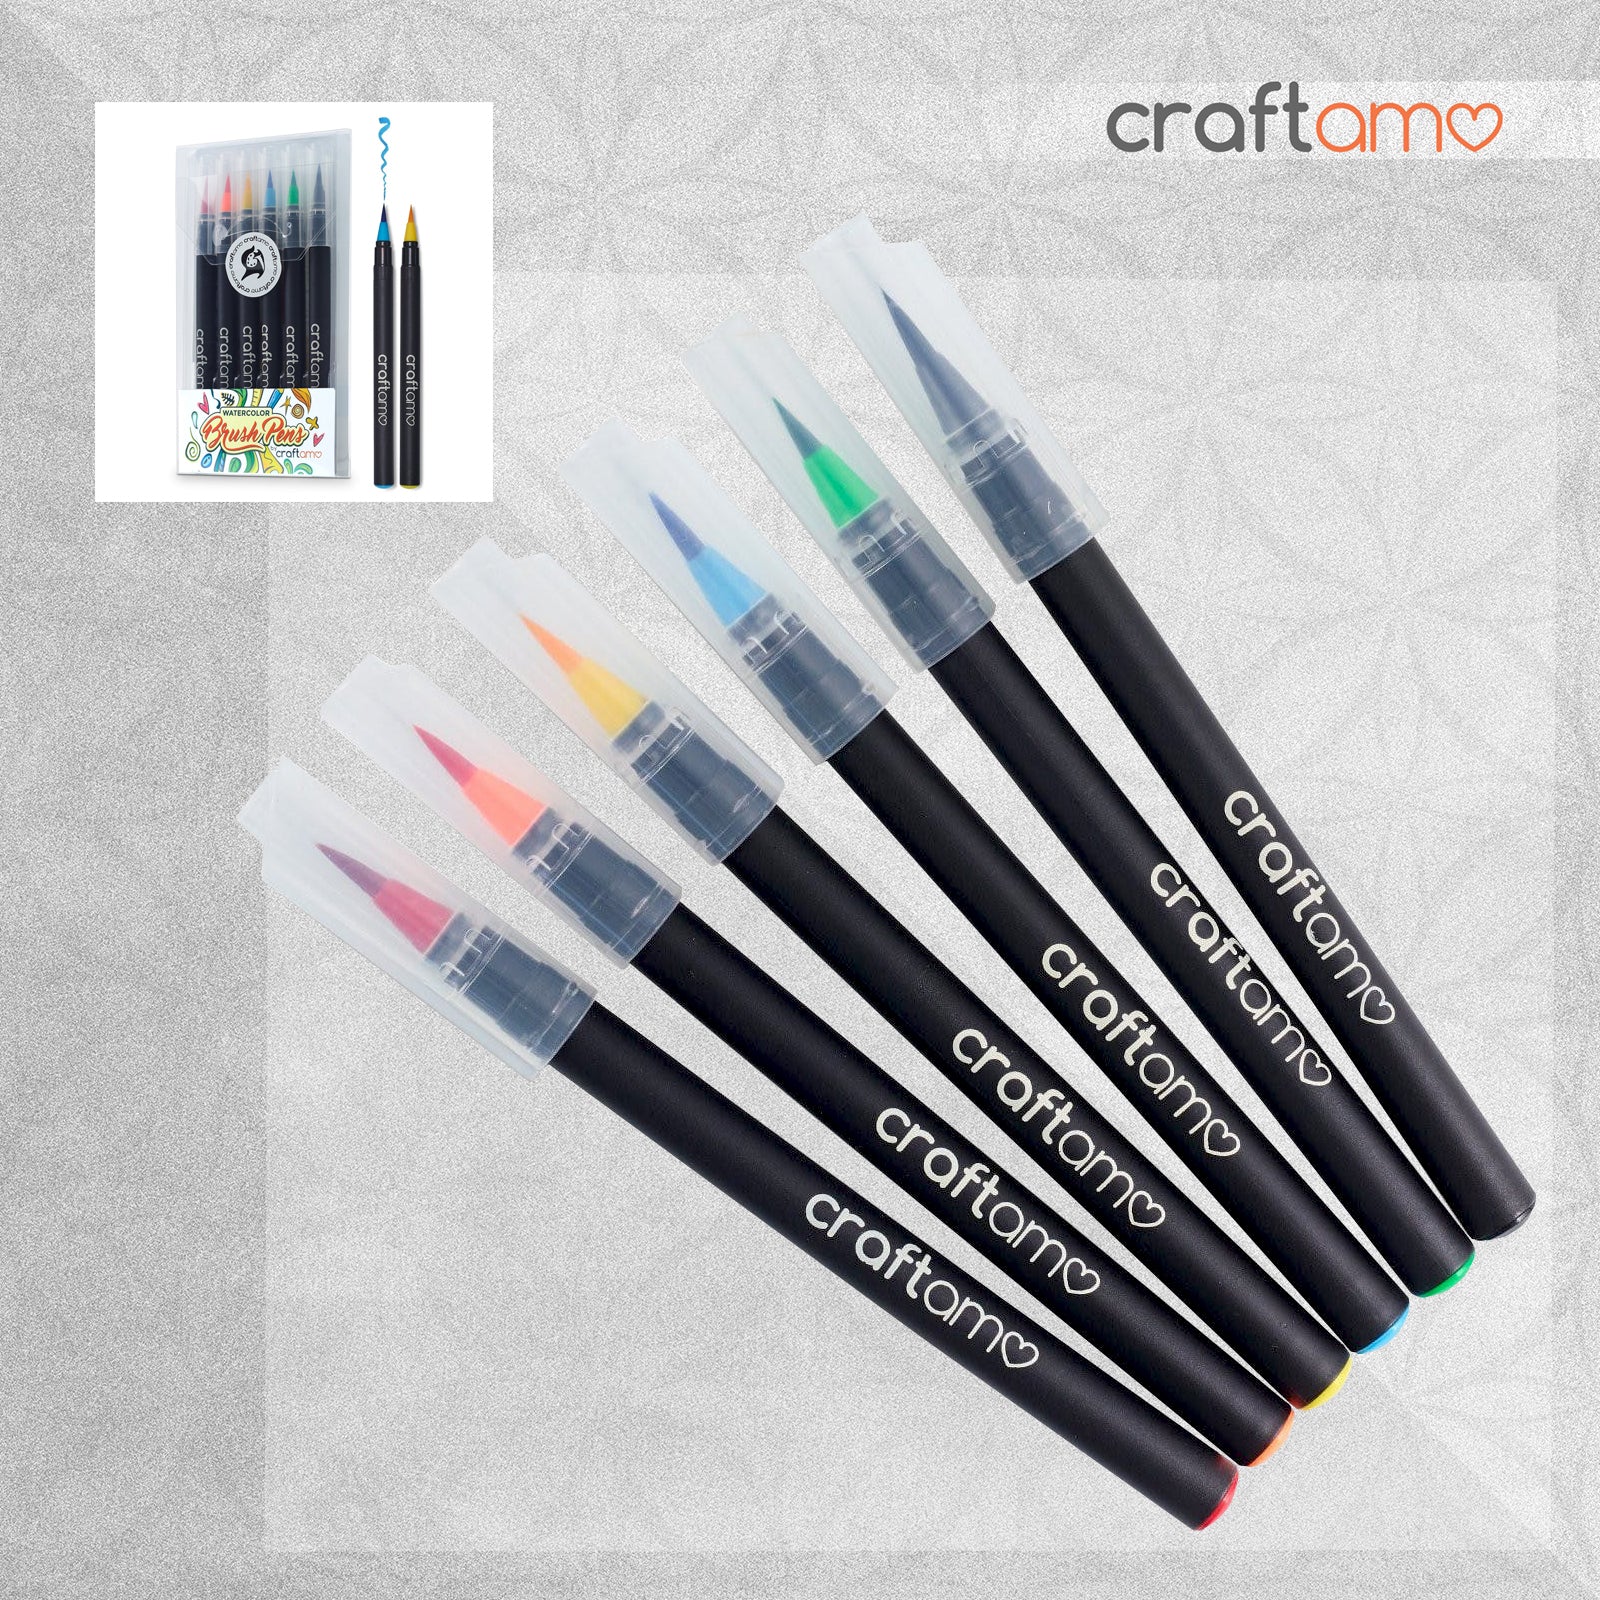 Craftamo Watercolour Brush Pens - Pack of 6